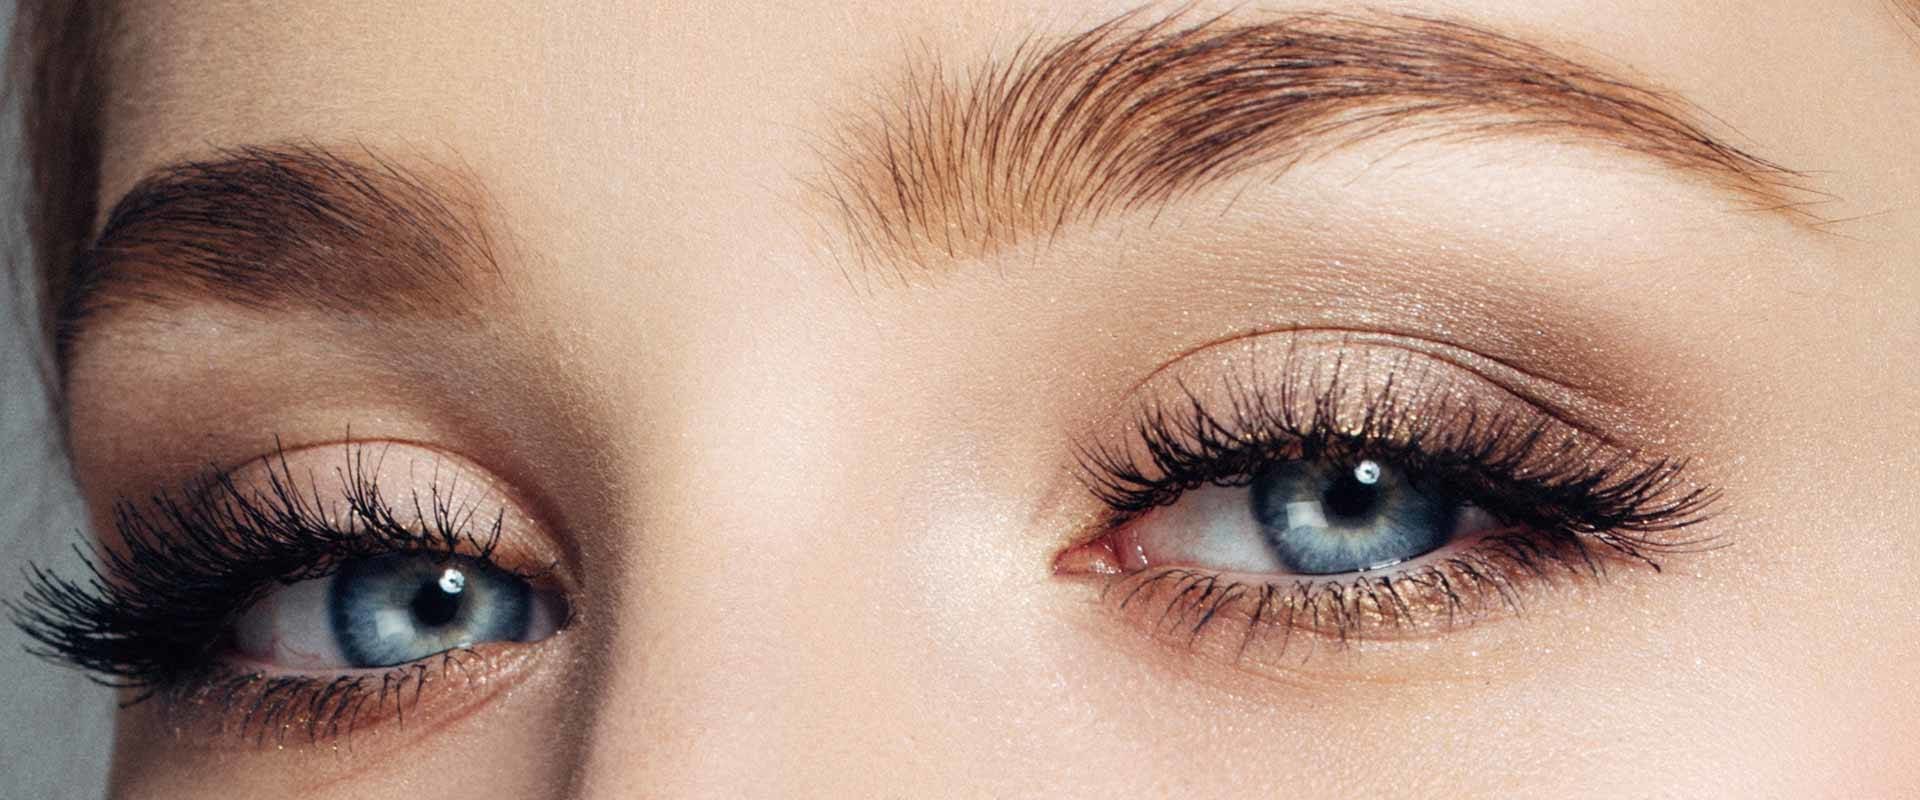 How to get wispy eyelashes?